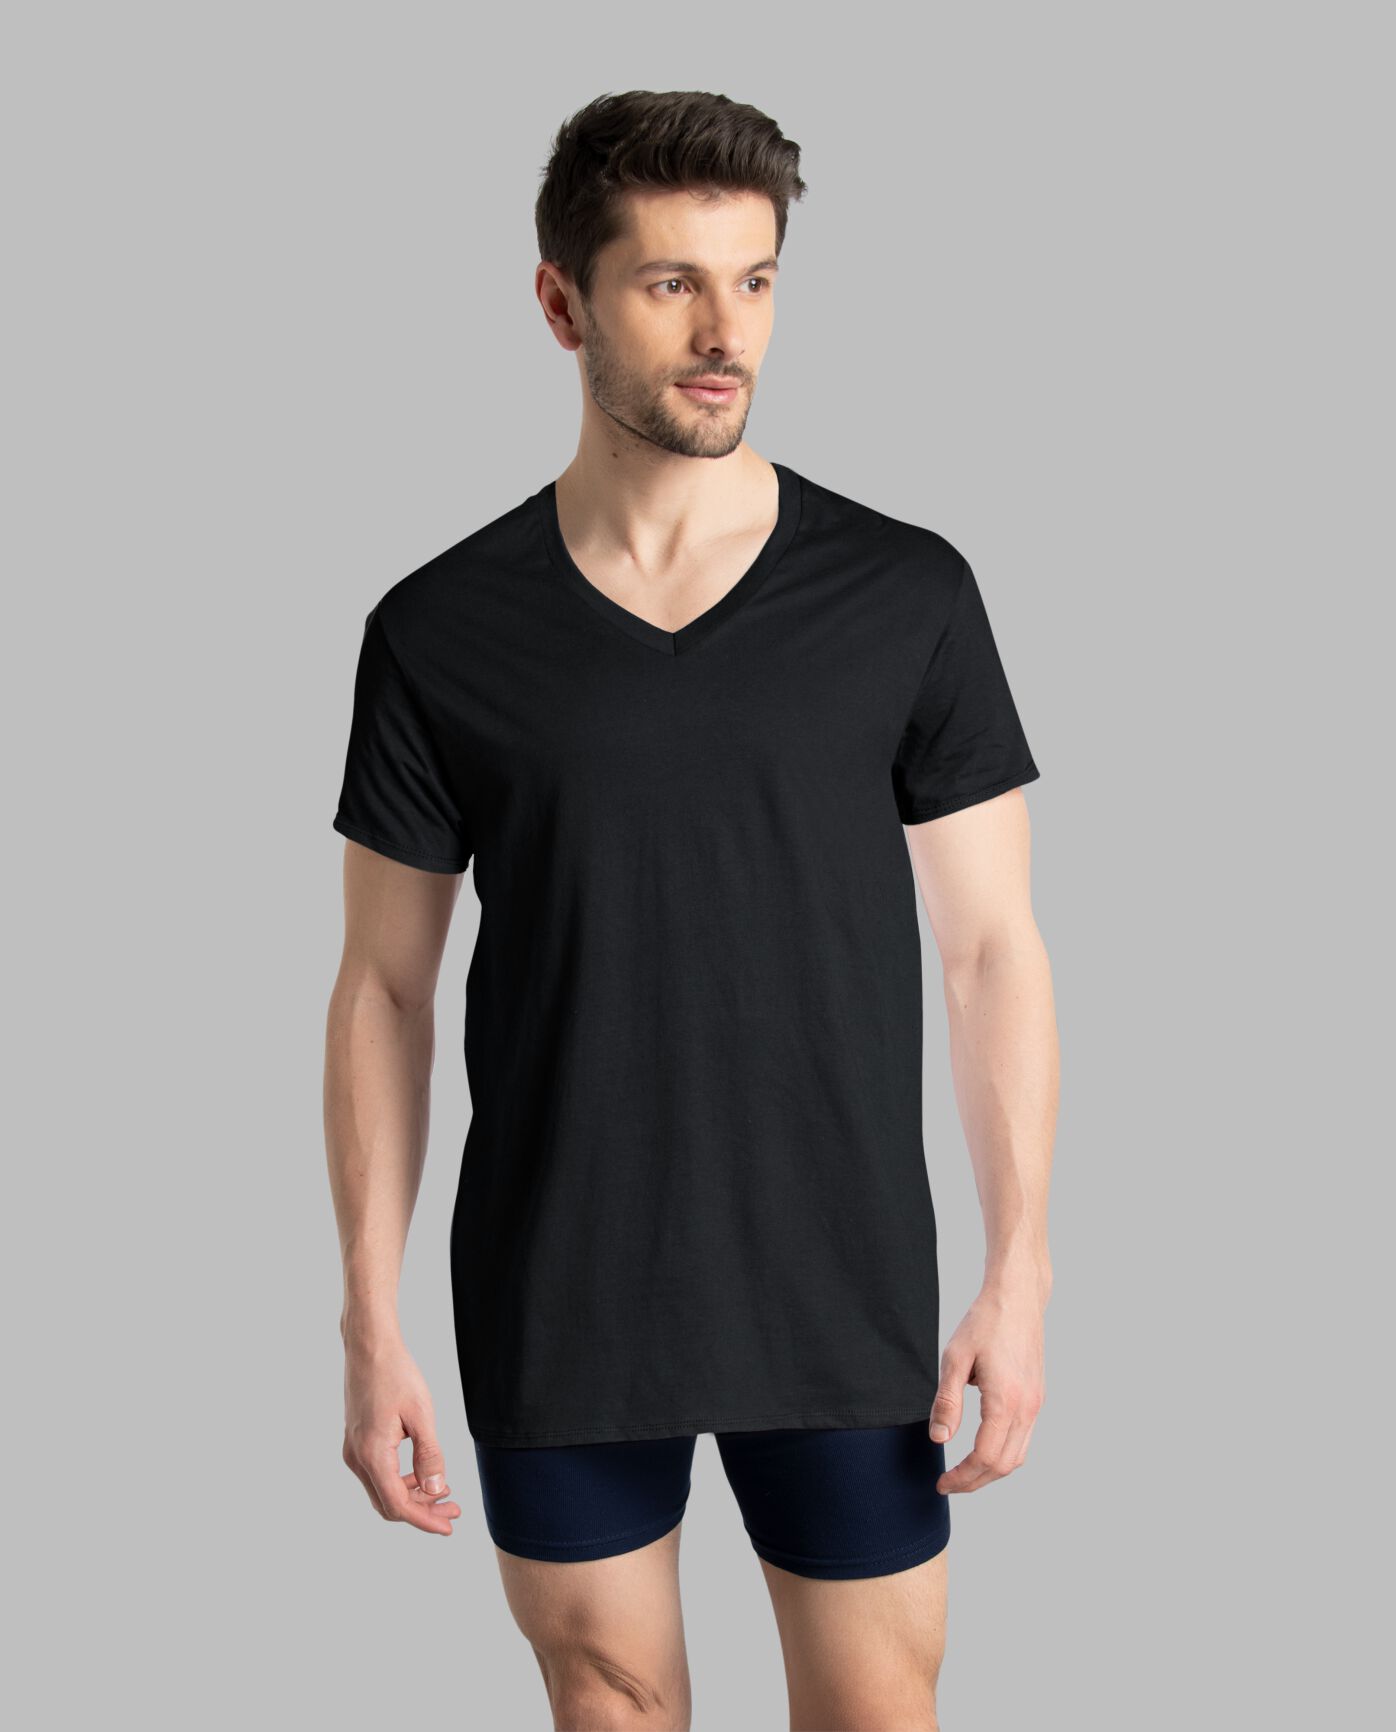 Plain T-shirt Combo For Men Black and White XL